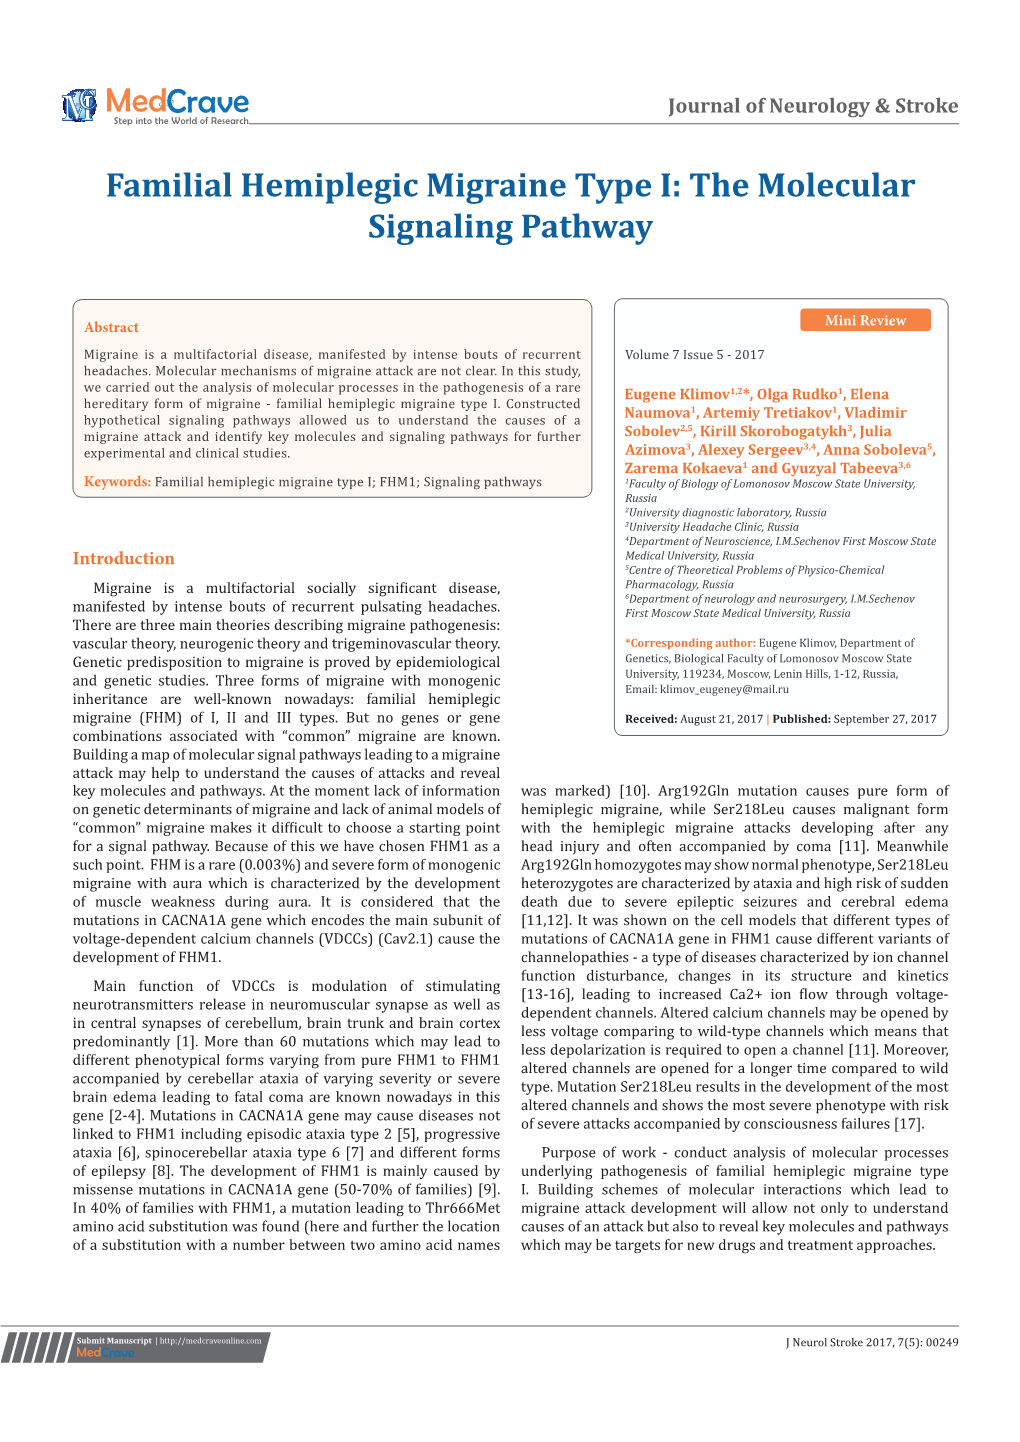 Familial Hemiplegic Migraine Type I: the Molecular Signaling Pathway